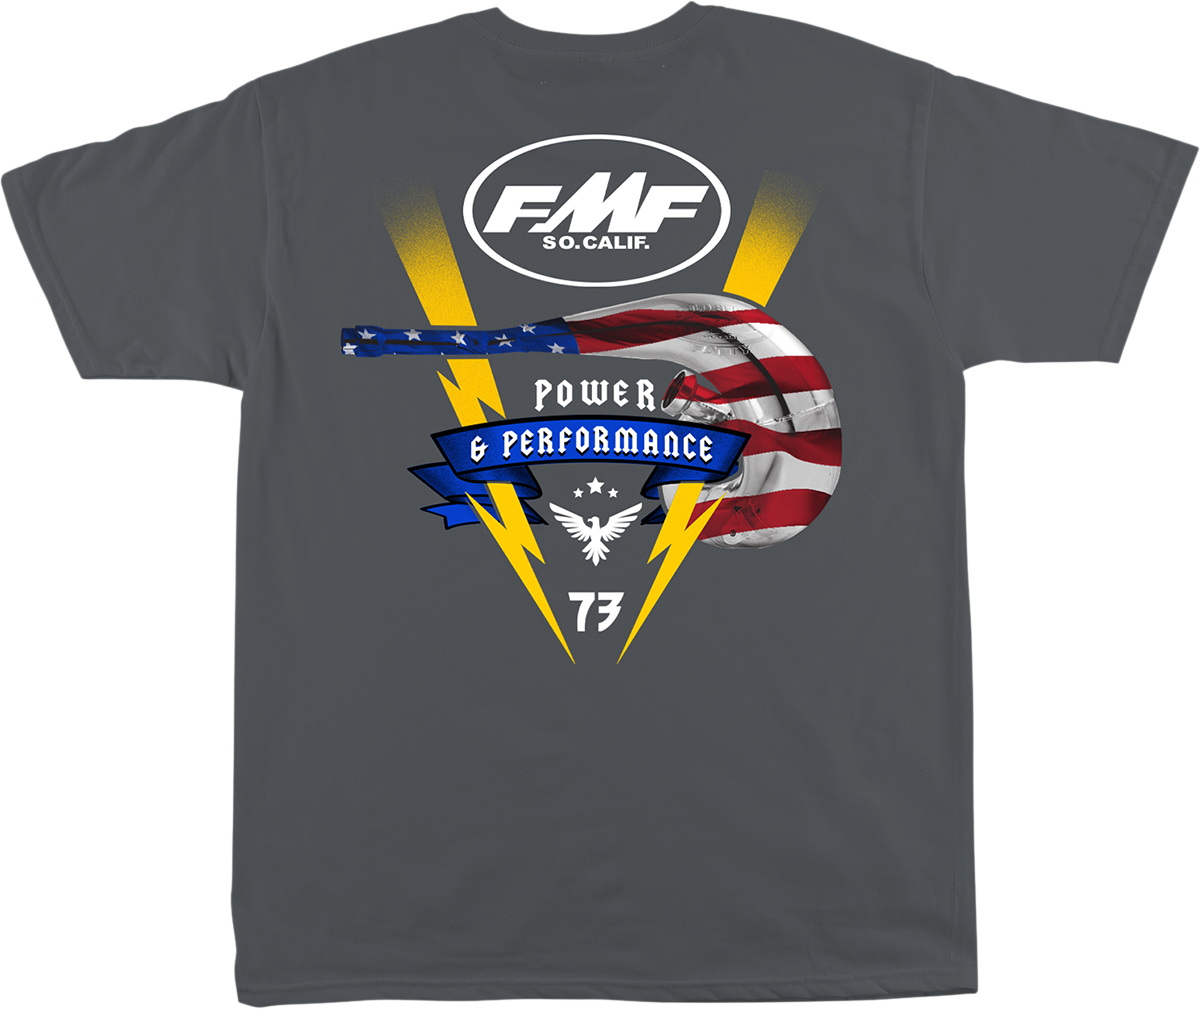 FMF Triumphant T-Shirt - Charcoal - Medium SP21118915CHMD 3030-20531